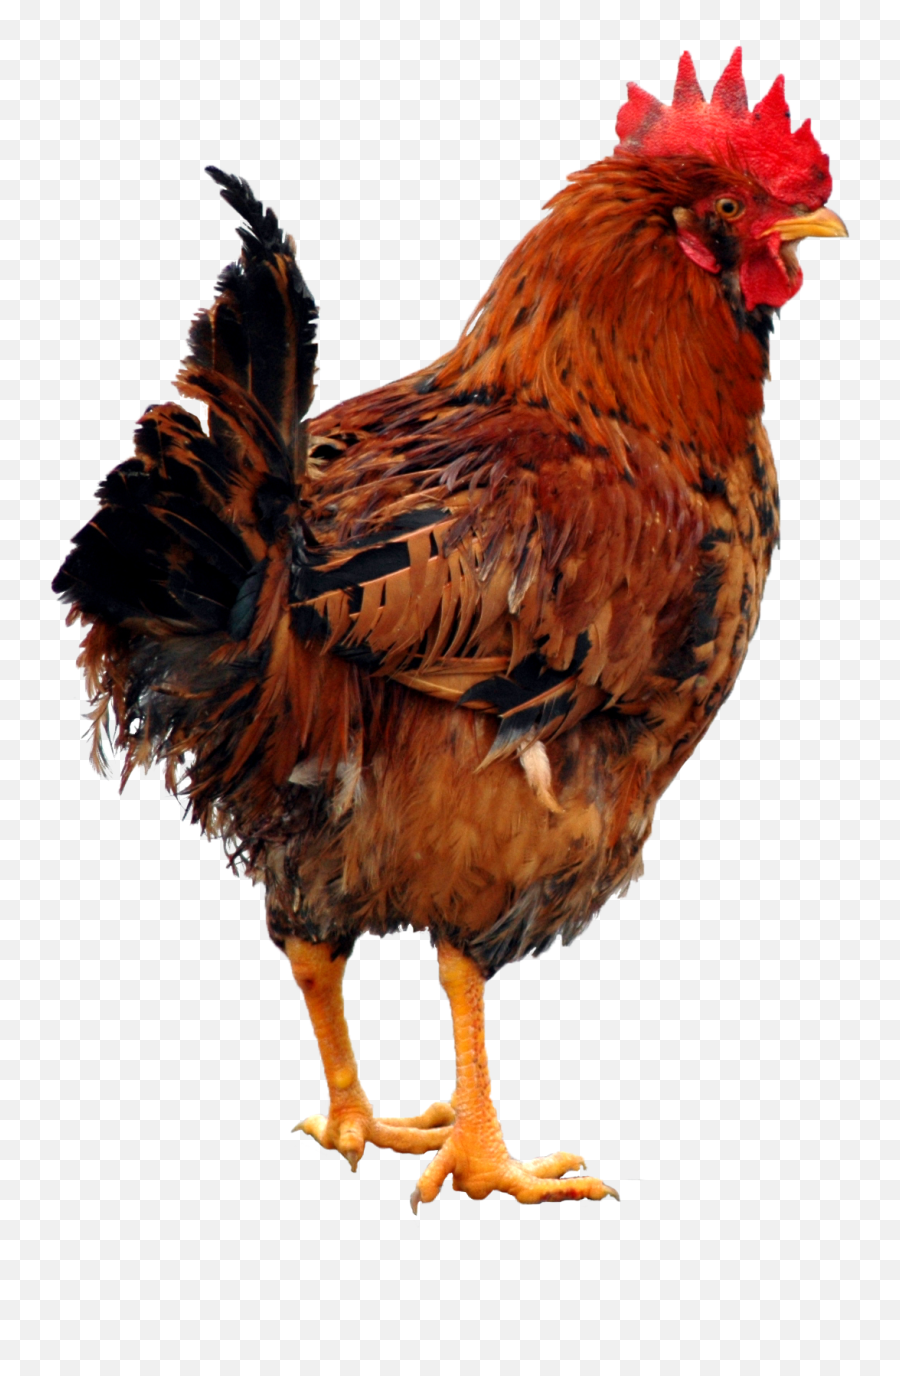 Download Chicken Png 5 - Transparent Chicken Clipart,Chicken Png